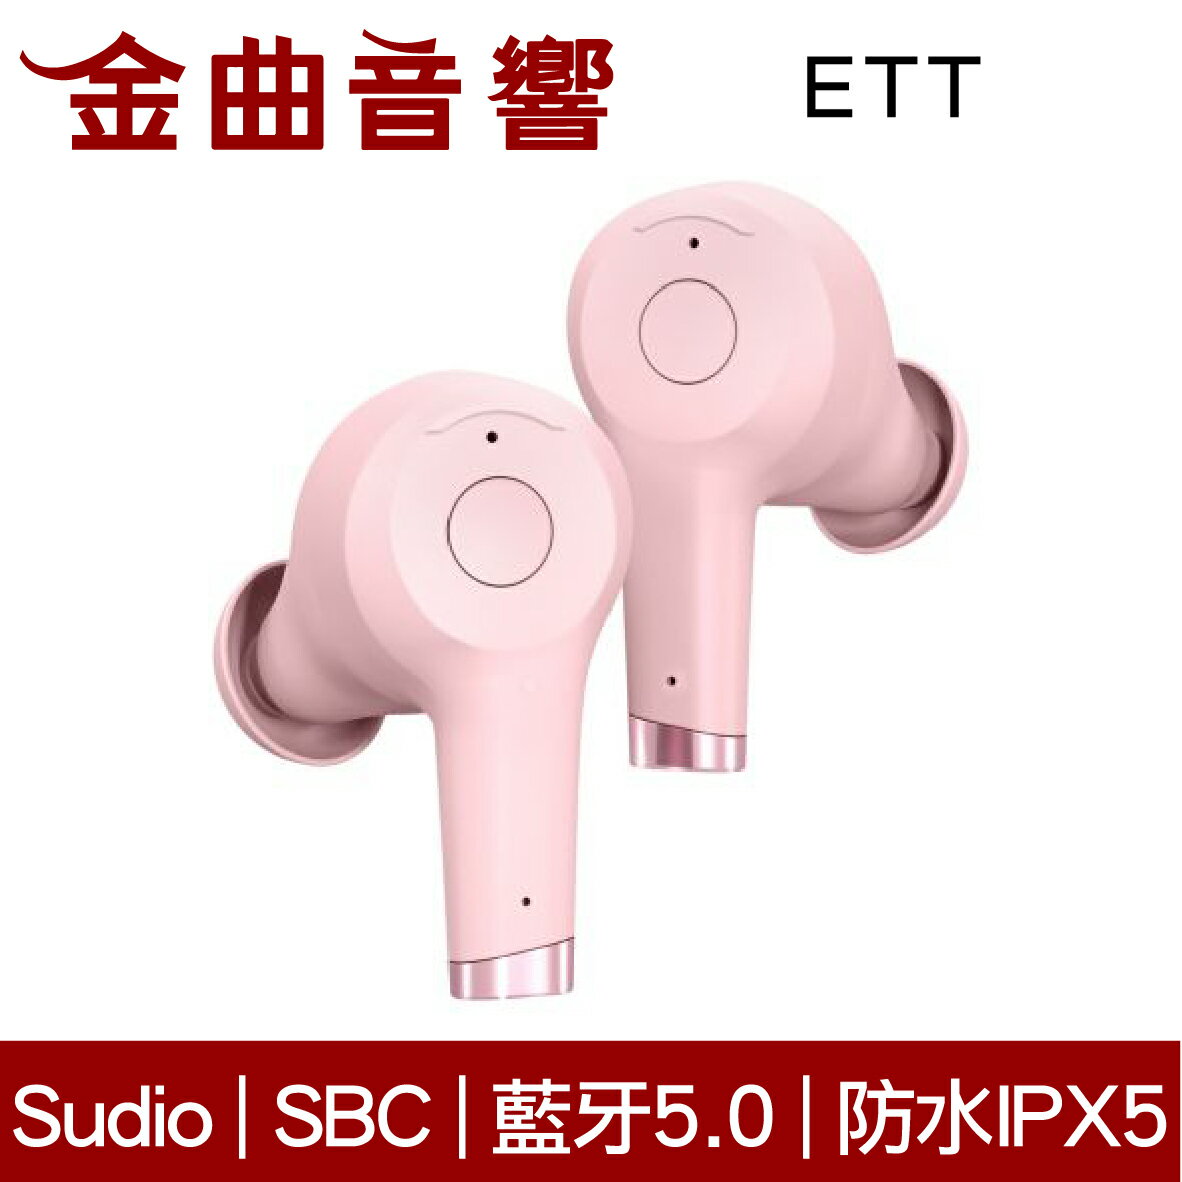 Sudio ETT 粉紅色 防水 無線 ANC 降噪 藍芽 耳機 | 金曲音響